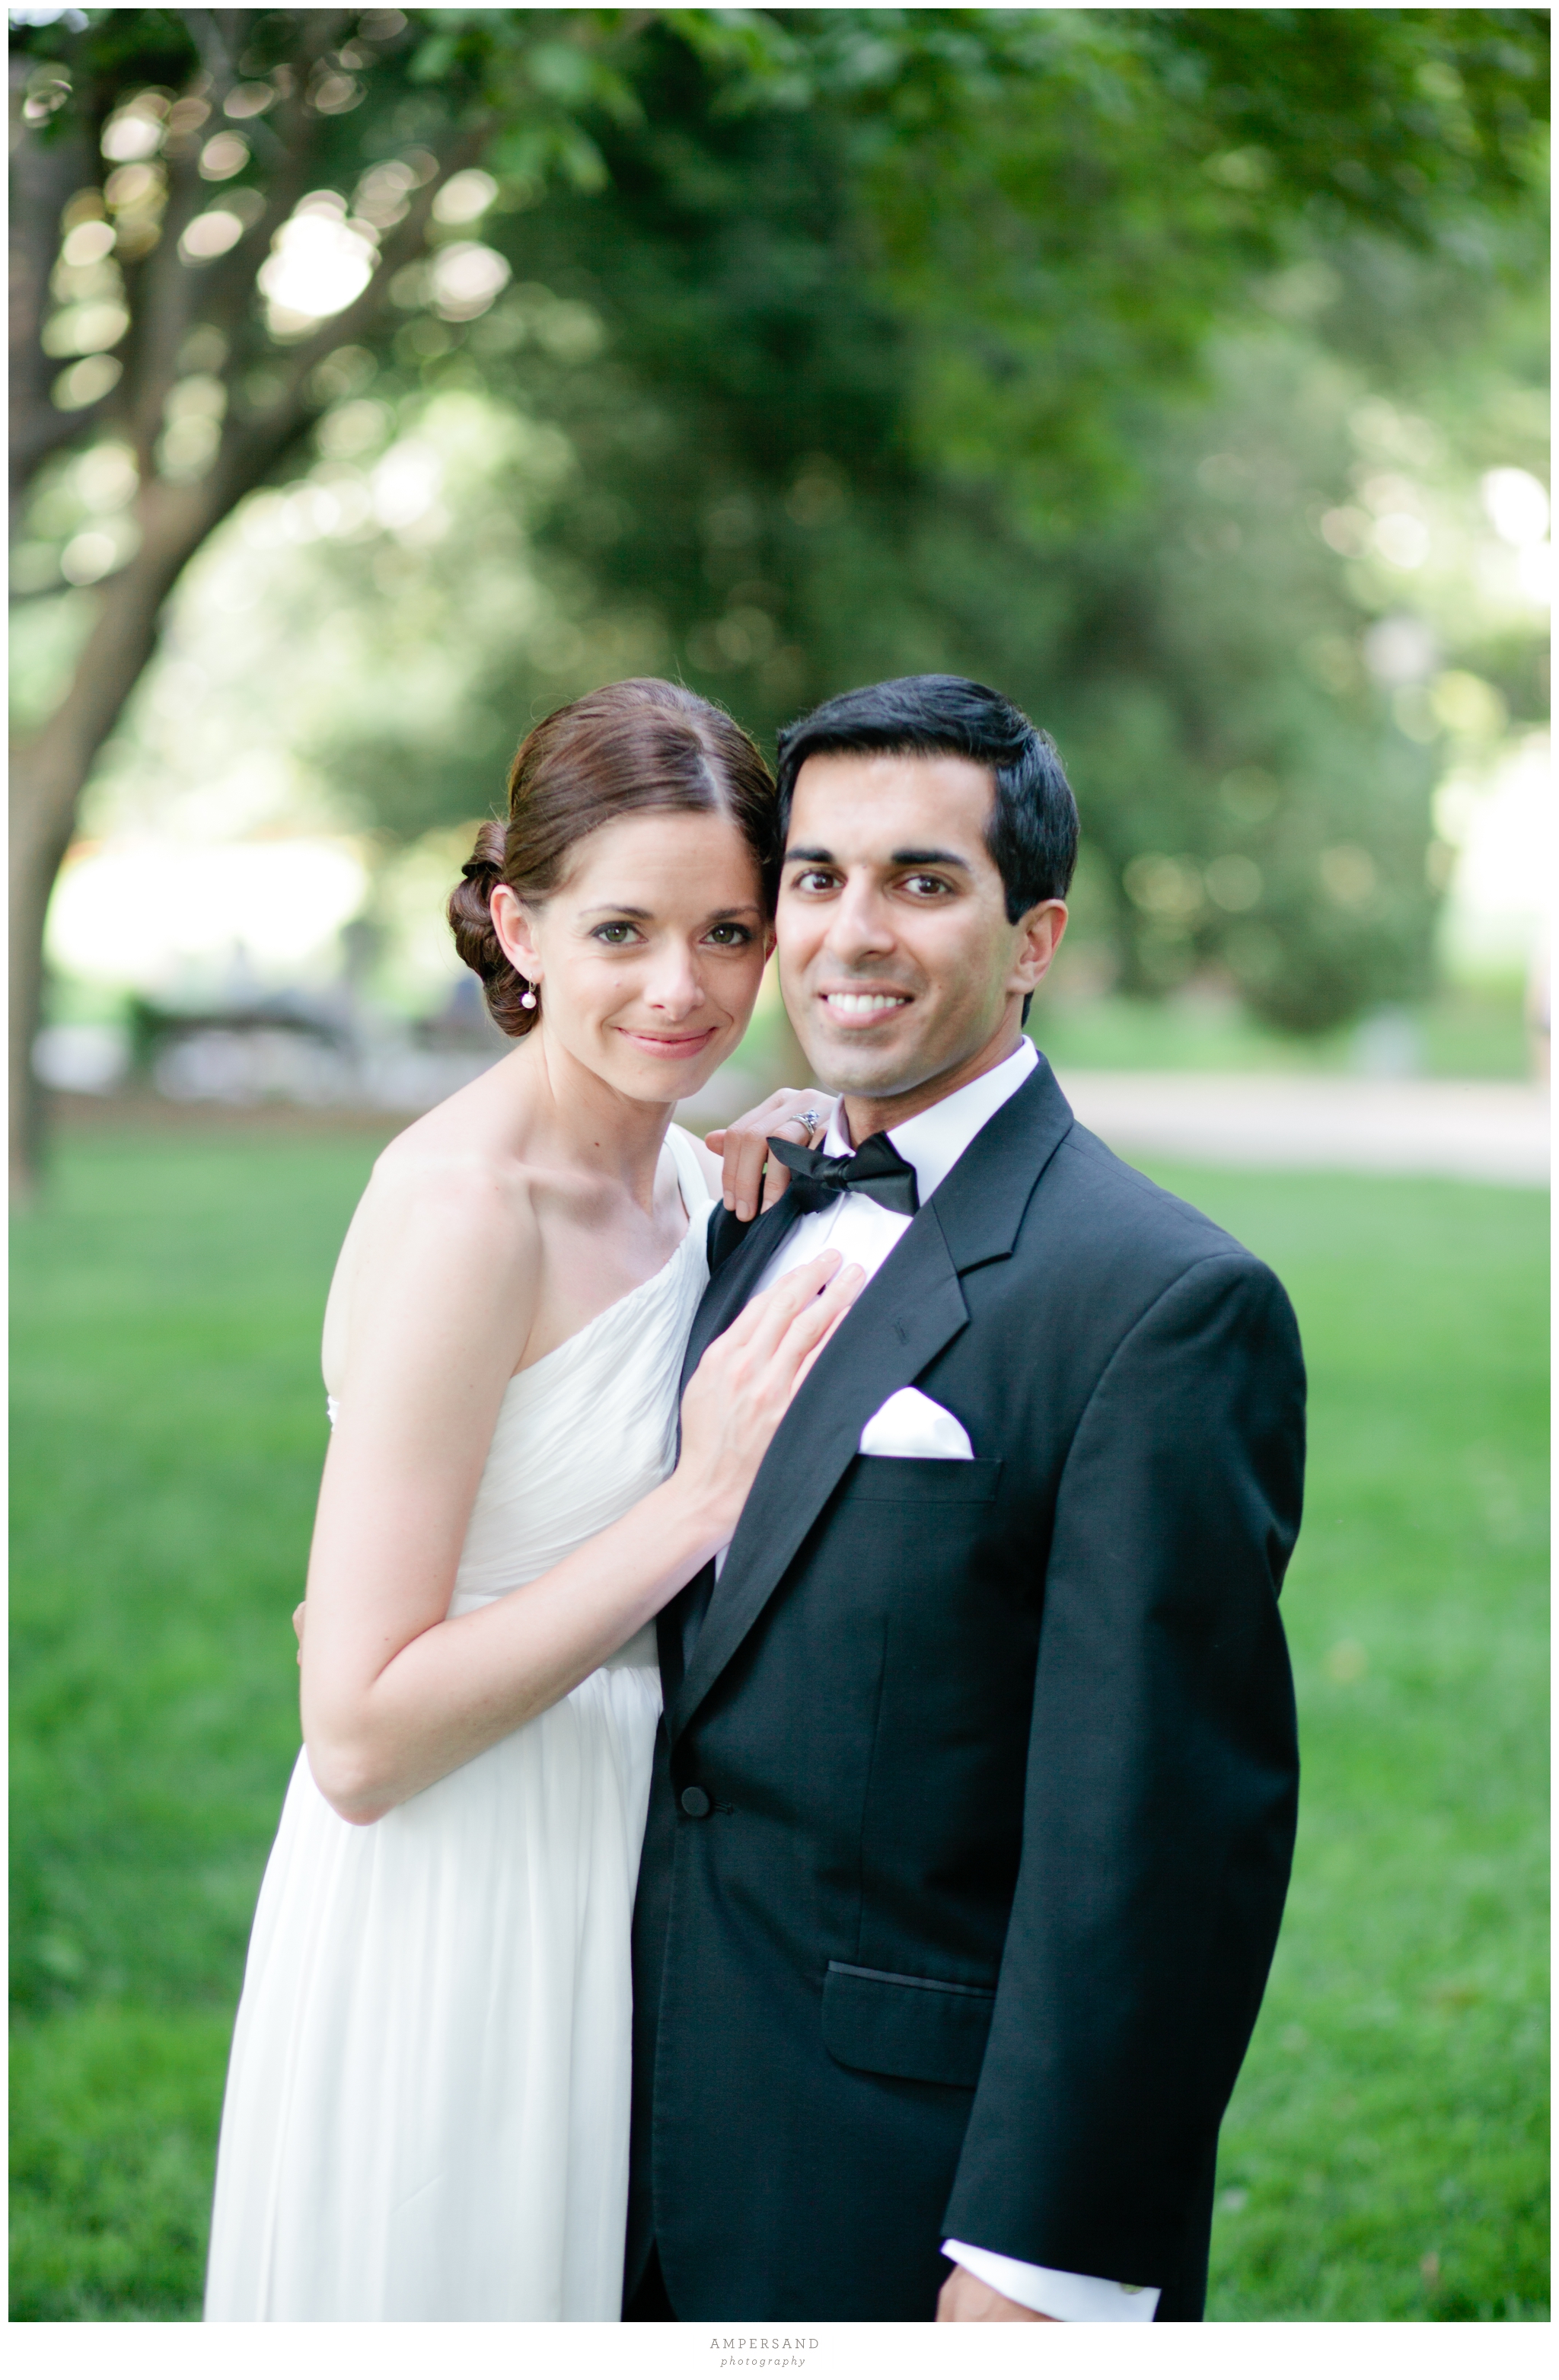 Sam Arora & Jaime Bugaski married in DC // Photos by Ampersand Photography